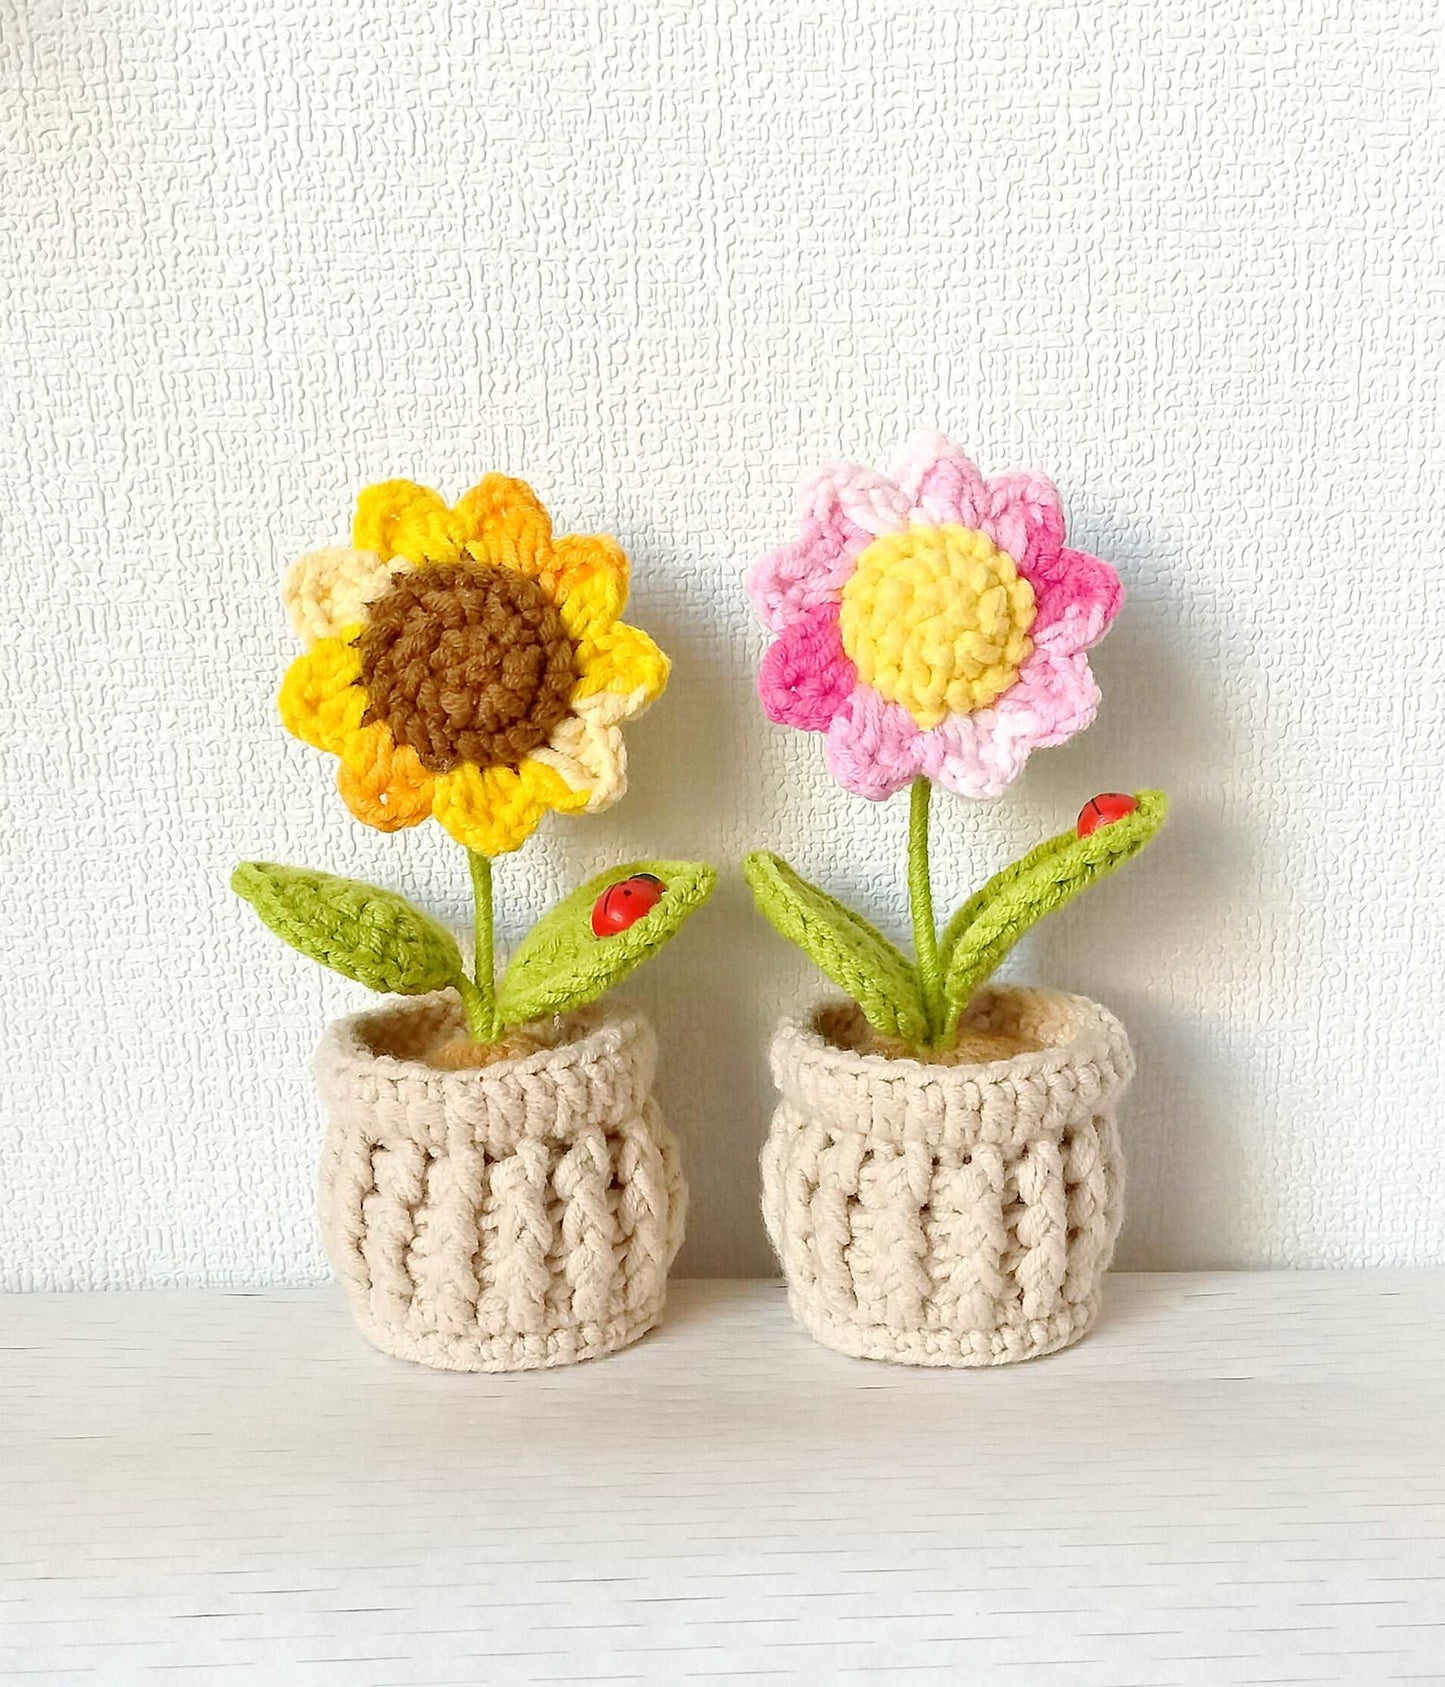 Vintage-Inspired Crochet Sunflower Pot Decoration